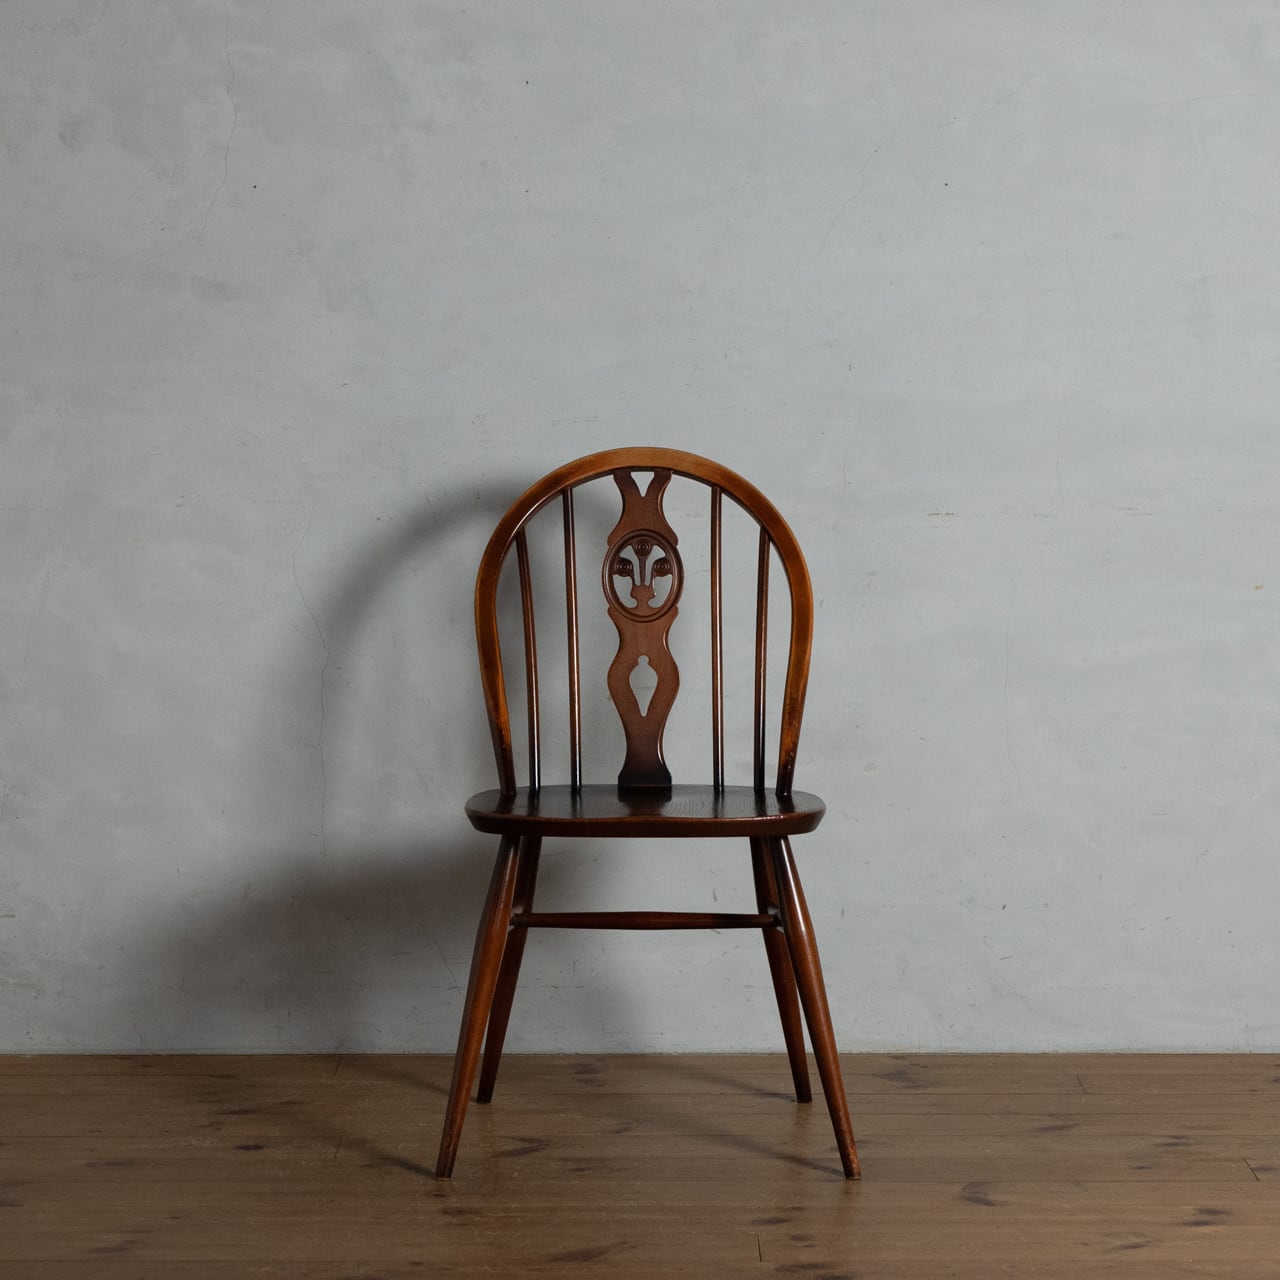 Ercol Thistleback Chair 【B】 / アーコール シスルバック チェア  〈ダイニングチェア・デスクチェア・椅子・コロニアル・アンティーク・ヴィンテージ〉 112585 | SHABBY'S MARKETPLACE　 アンティーク・ヴィンテージ 家具や雑貨のお店 powered